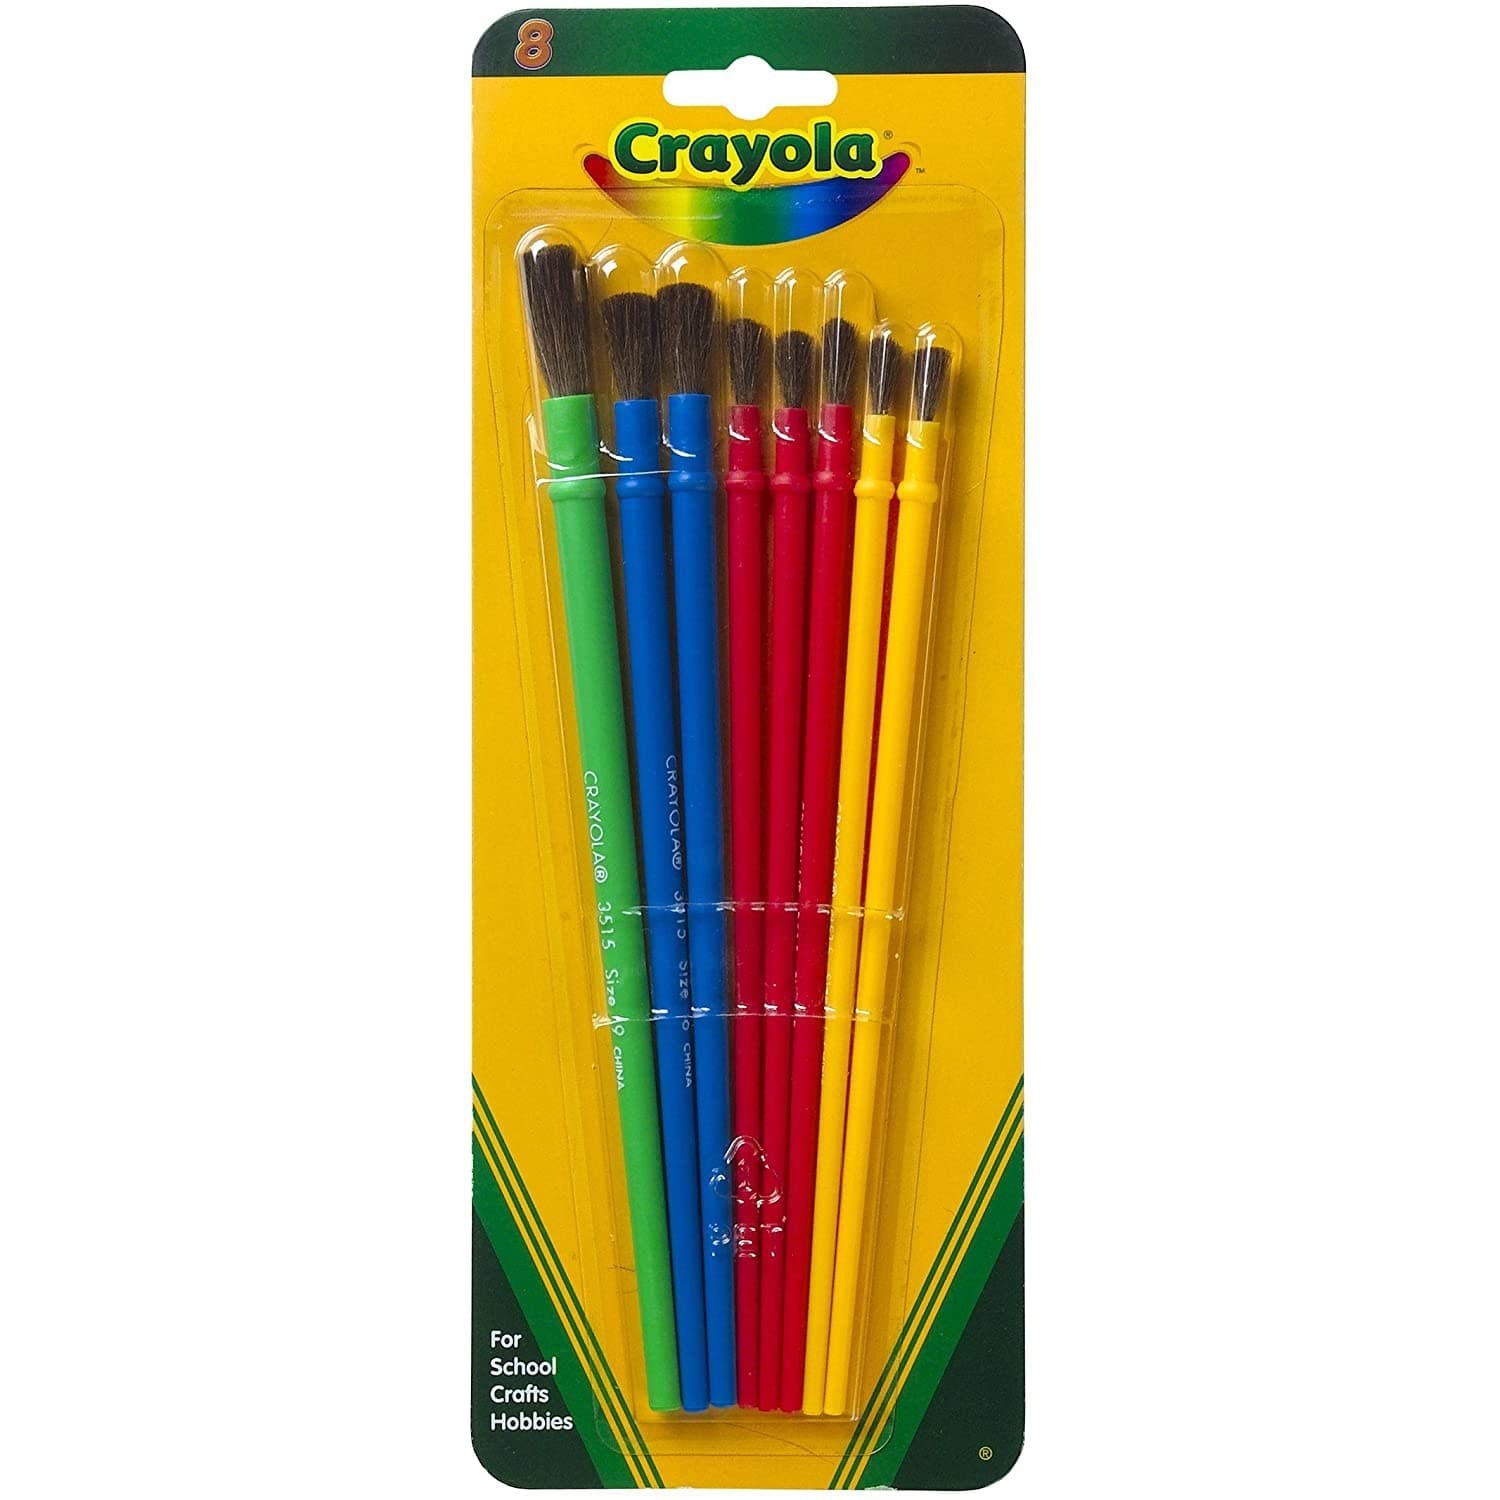 Crayola-Crayola 8 Count Art & Craft Brush Set - Blister Pack-590354-Legacy Toys